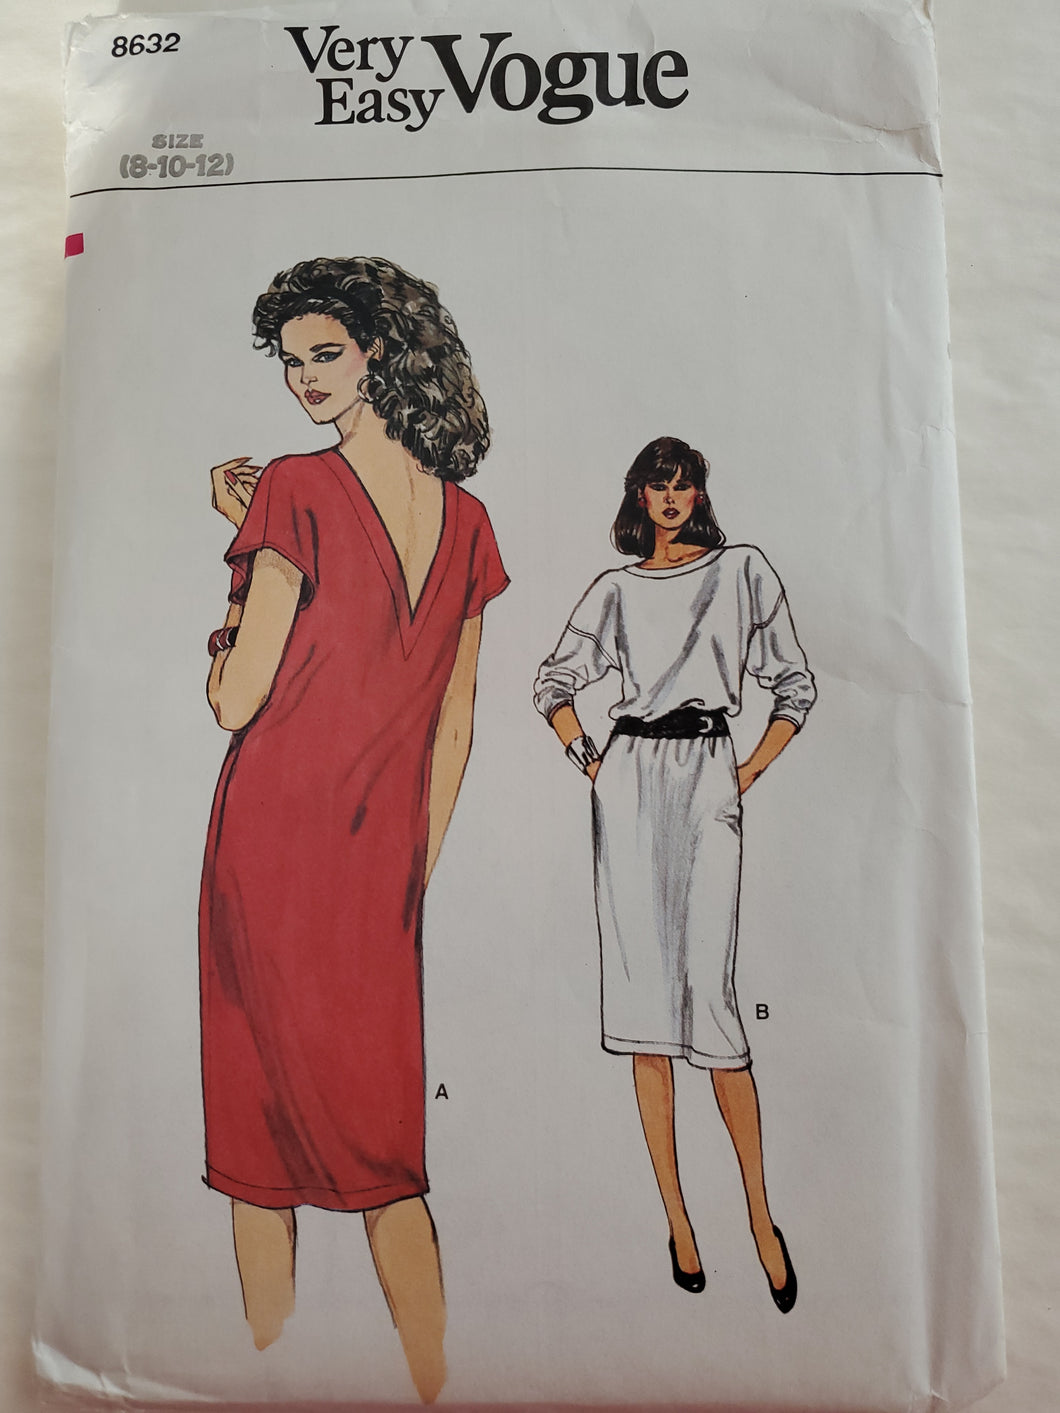 Vintage Vogue 8632 Misses Very Easy Vogue Dress, Size 8-10-12